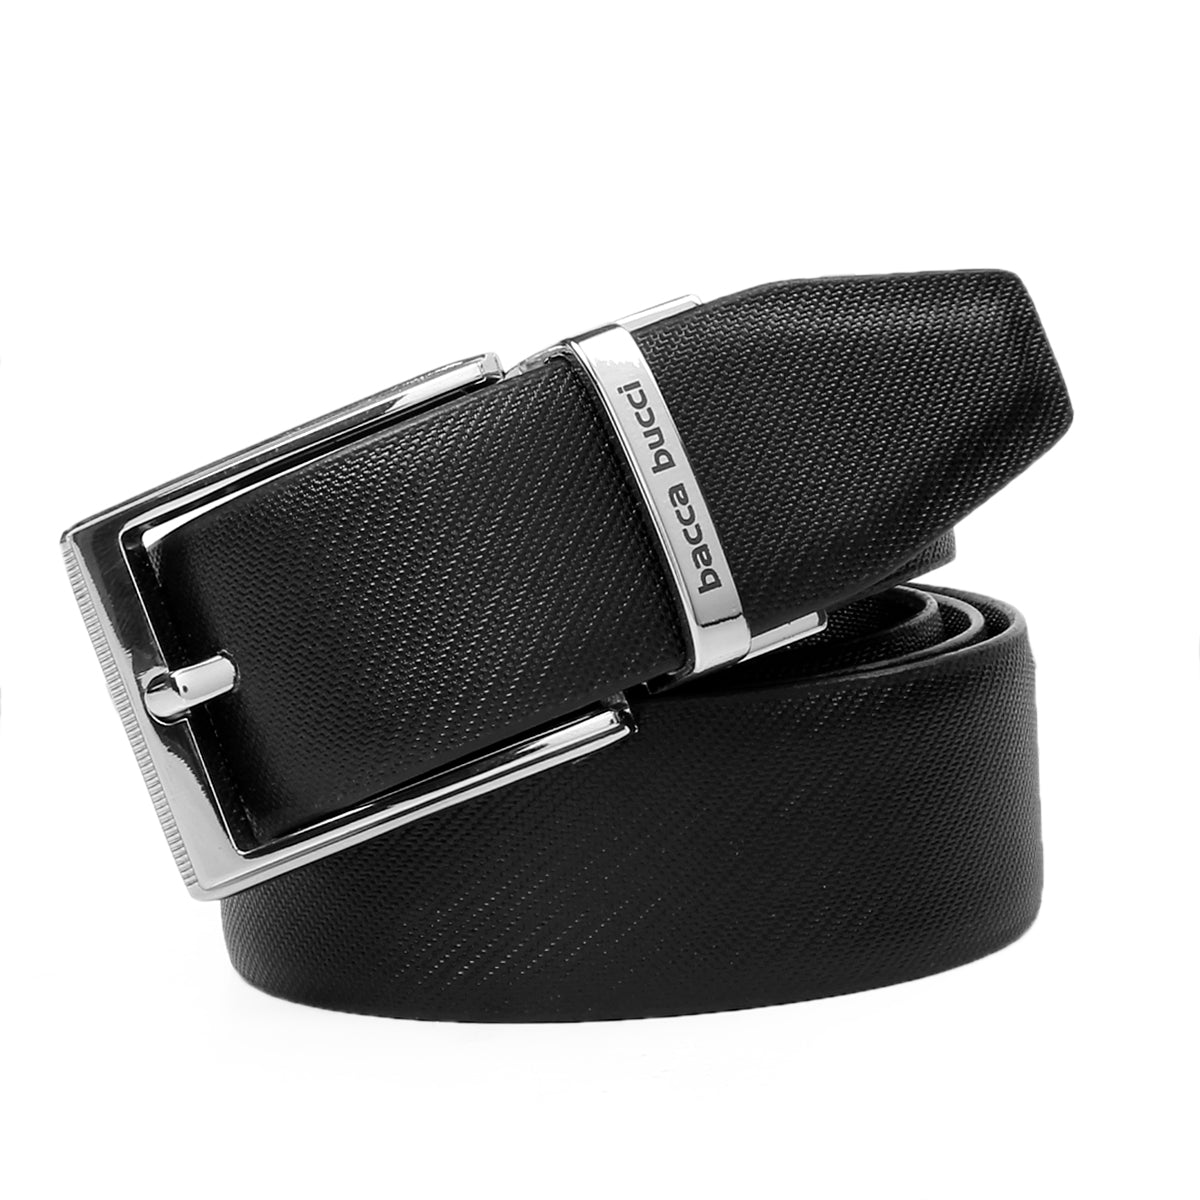 MKC Leather Belt - Black - USA Made XLarge: 42-44 Waist